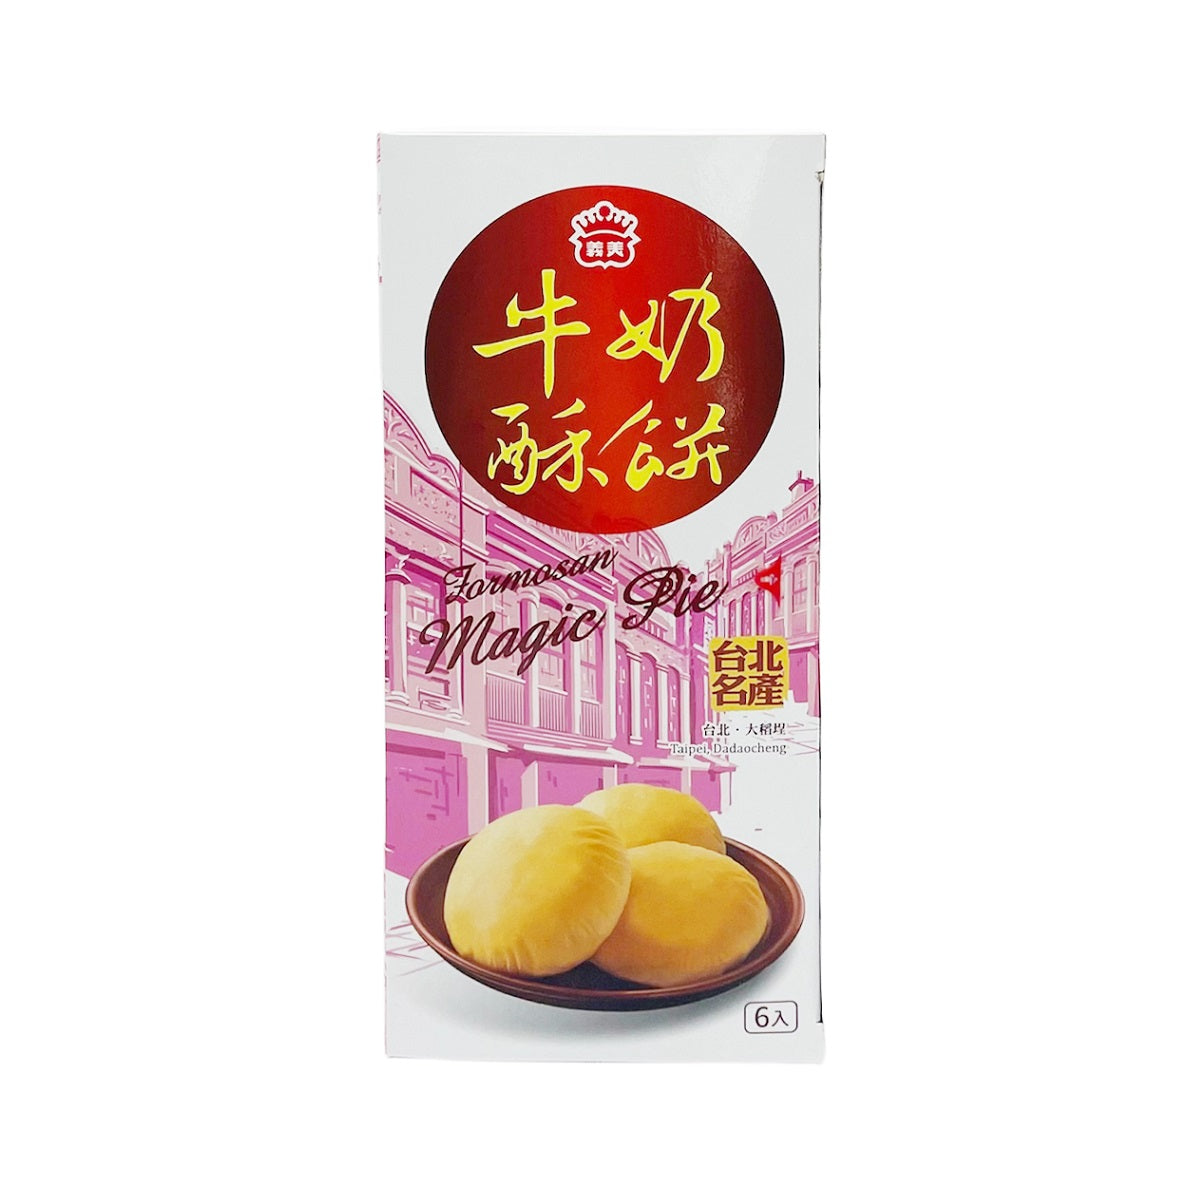 【 I-MEI 】 Formosan Magic Pie 300g 6pcs